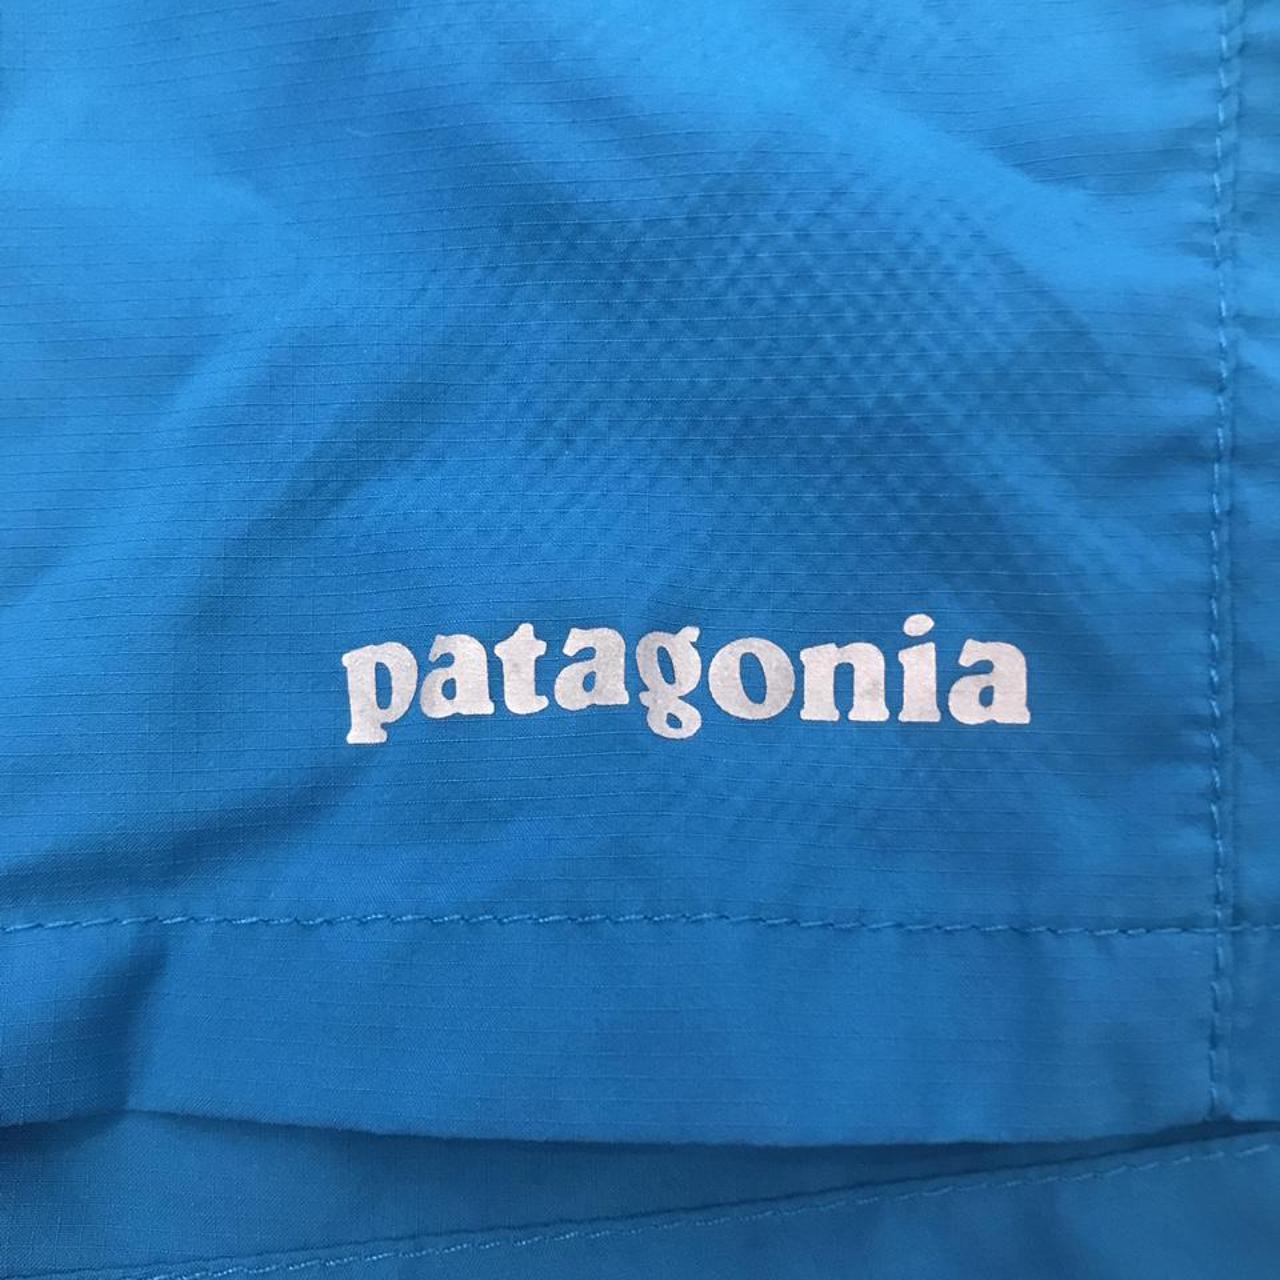 Product Image 3 - Patagonia Running Shorts 

- Size